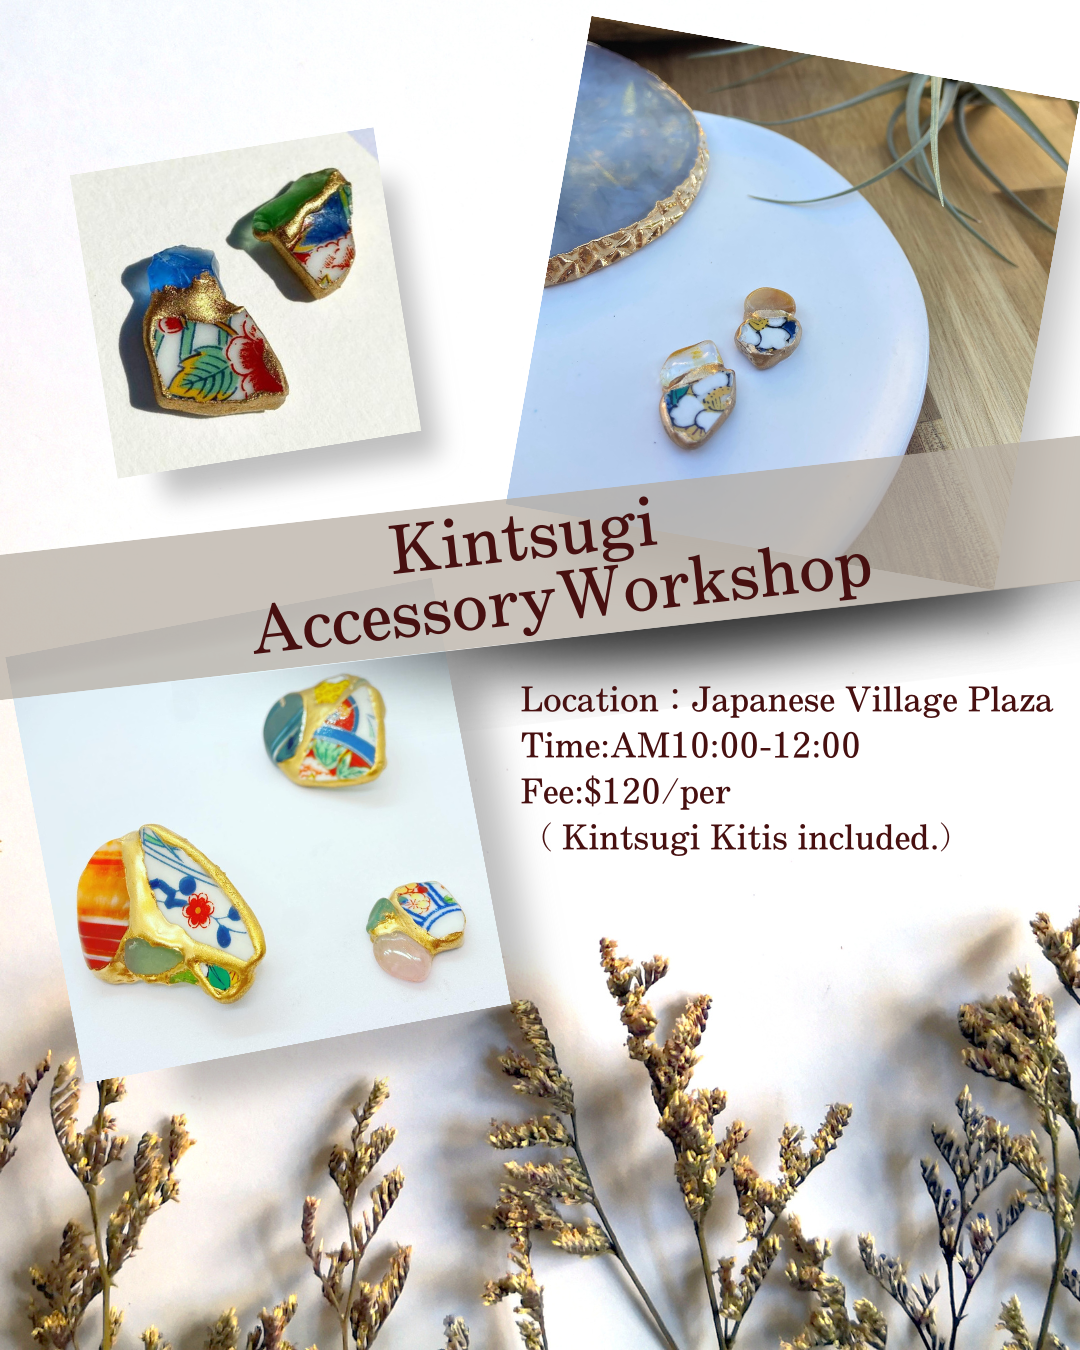 Kintsugi Accessory Workshop